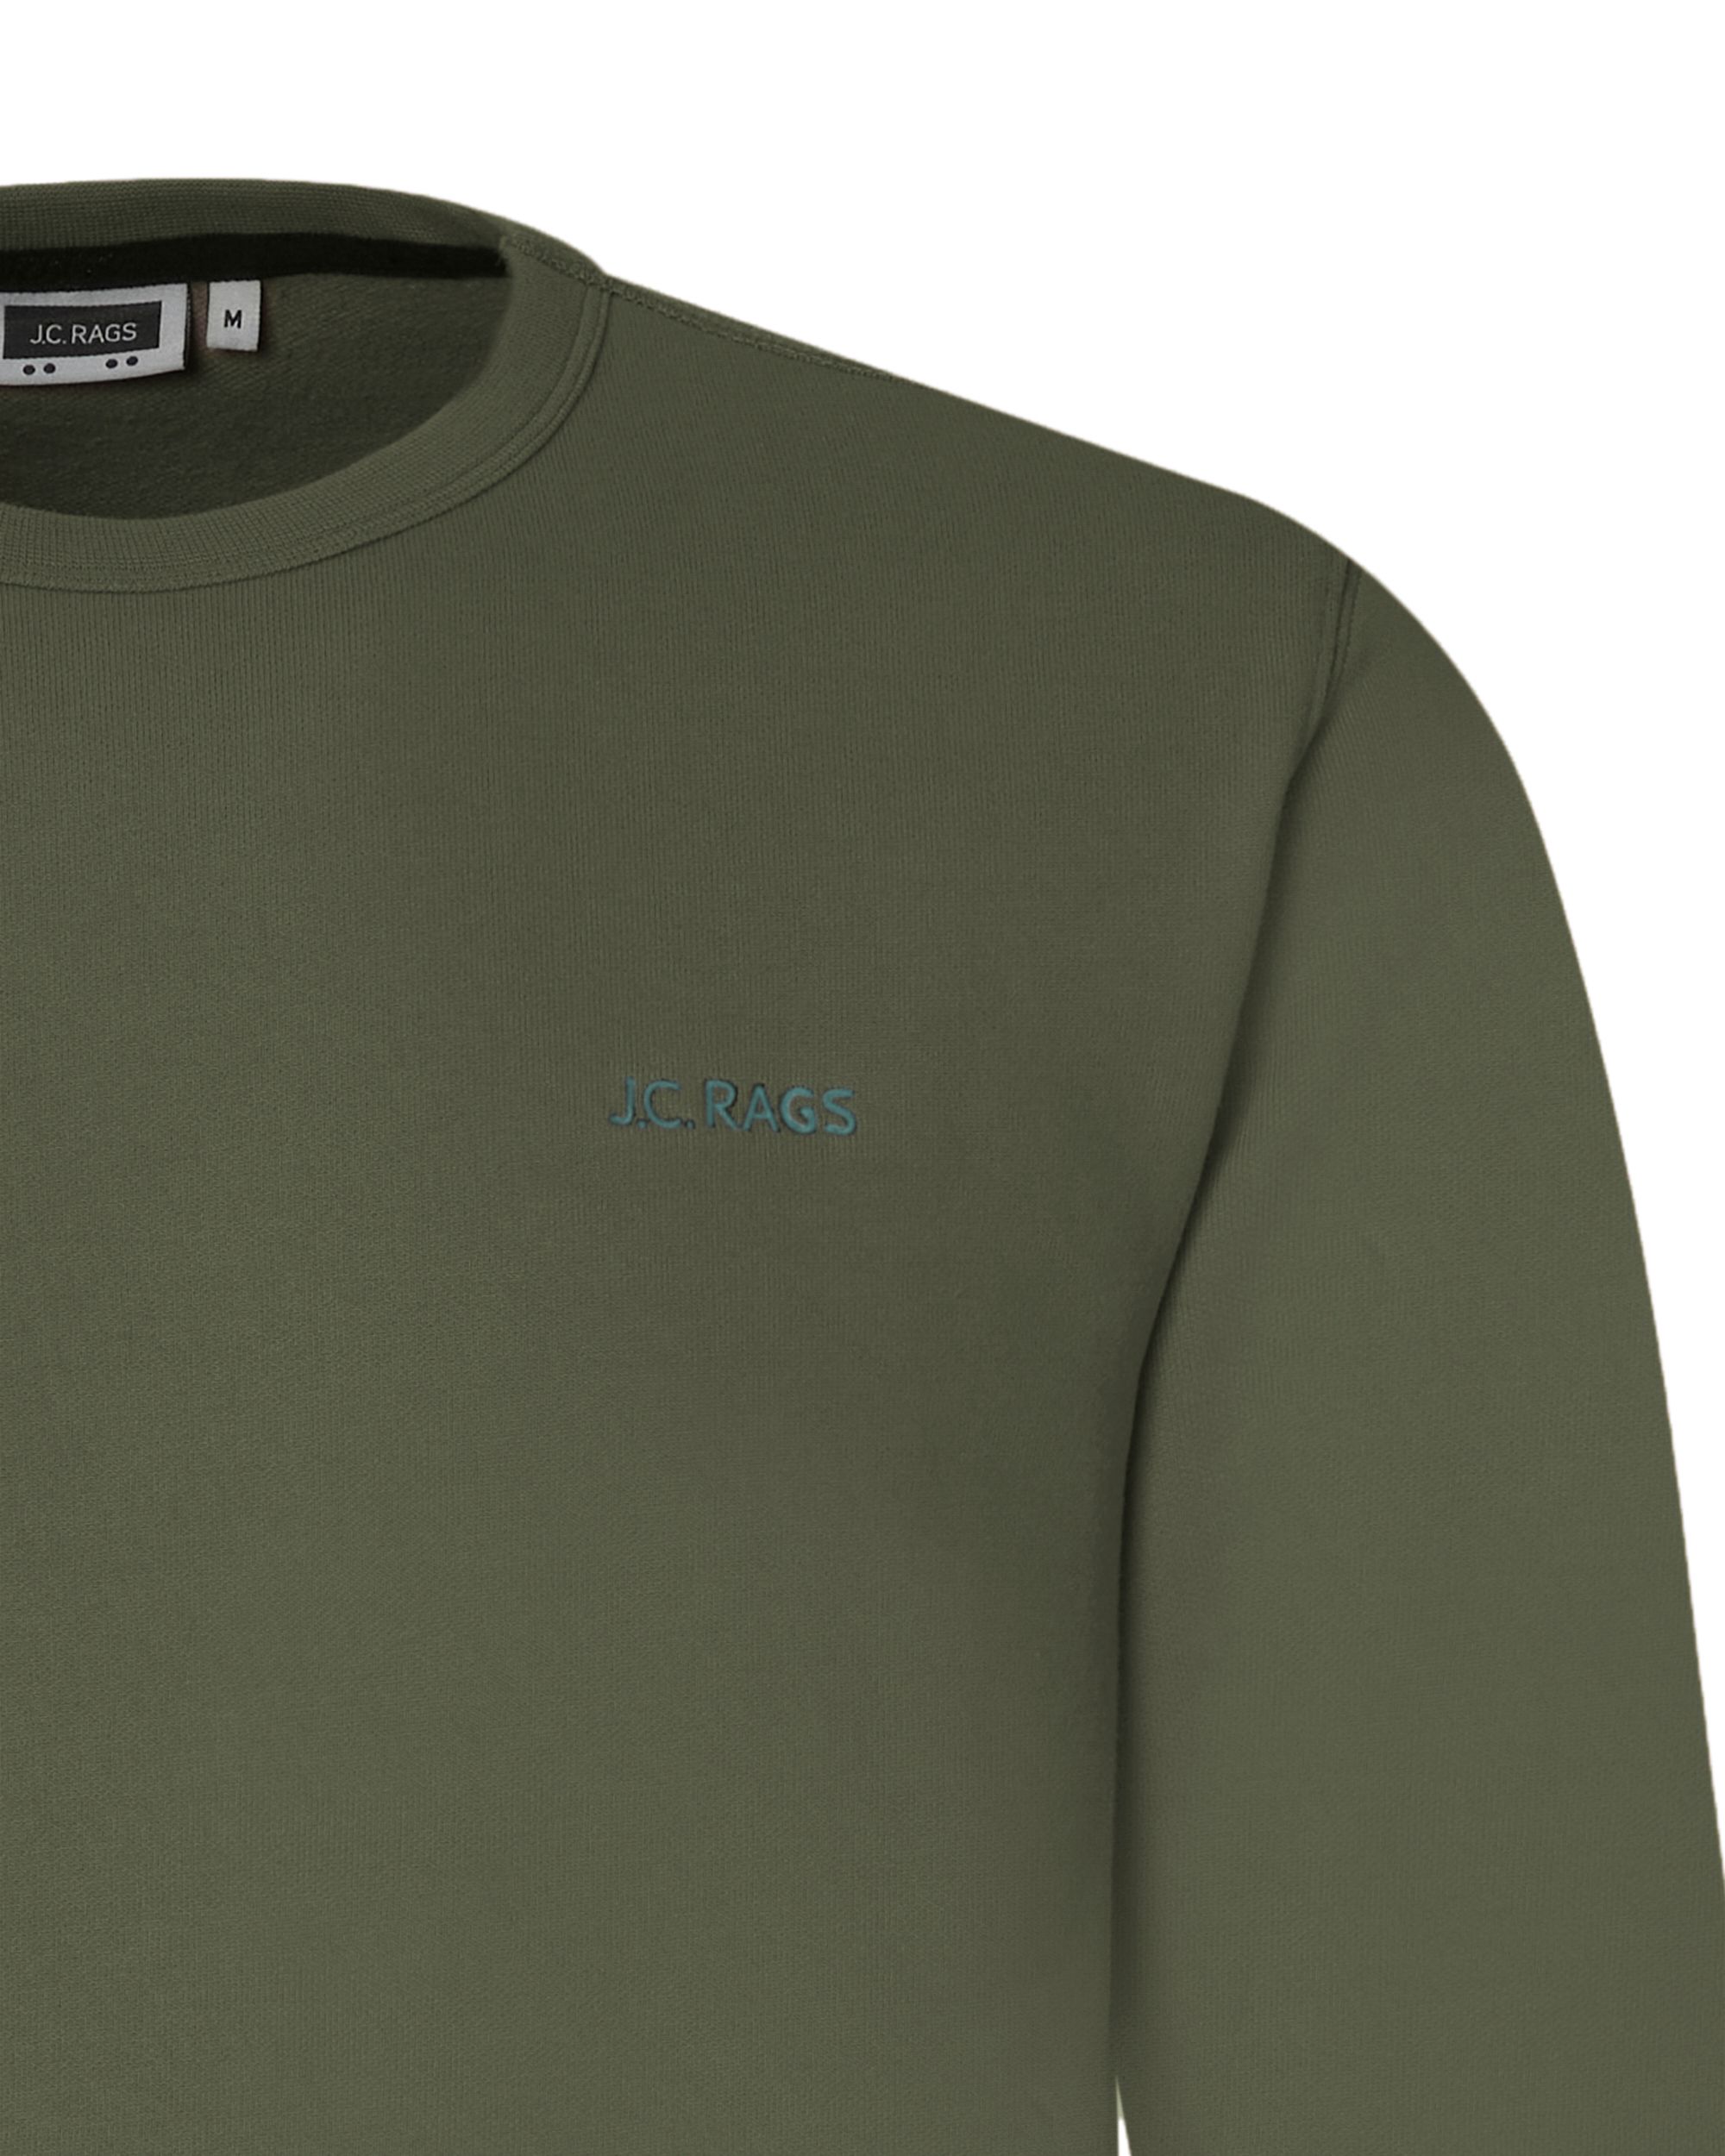 J.C. RAGS Jordan Sweater Olijf groen uni 073069-007-L